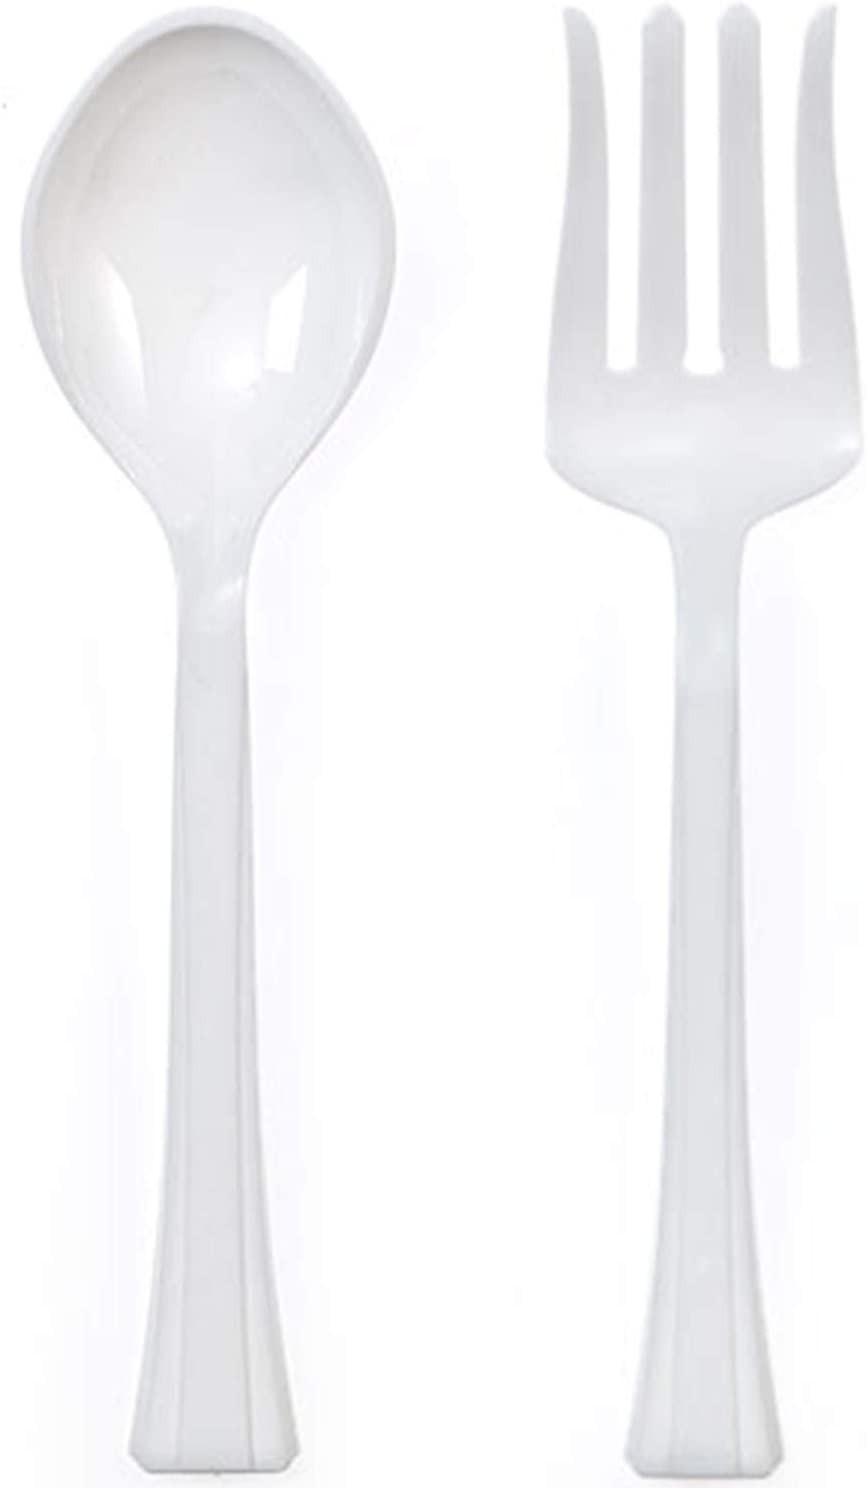 TigerChef White Heavy Duty Disposable Plastic Serving Spoon/Fork Set, 6 Sets